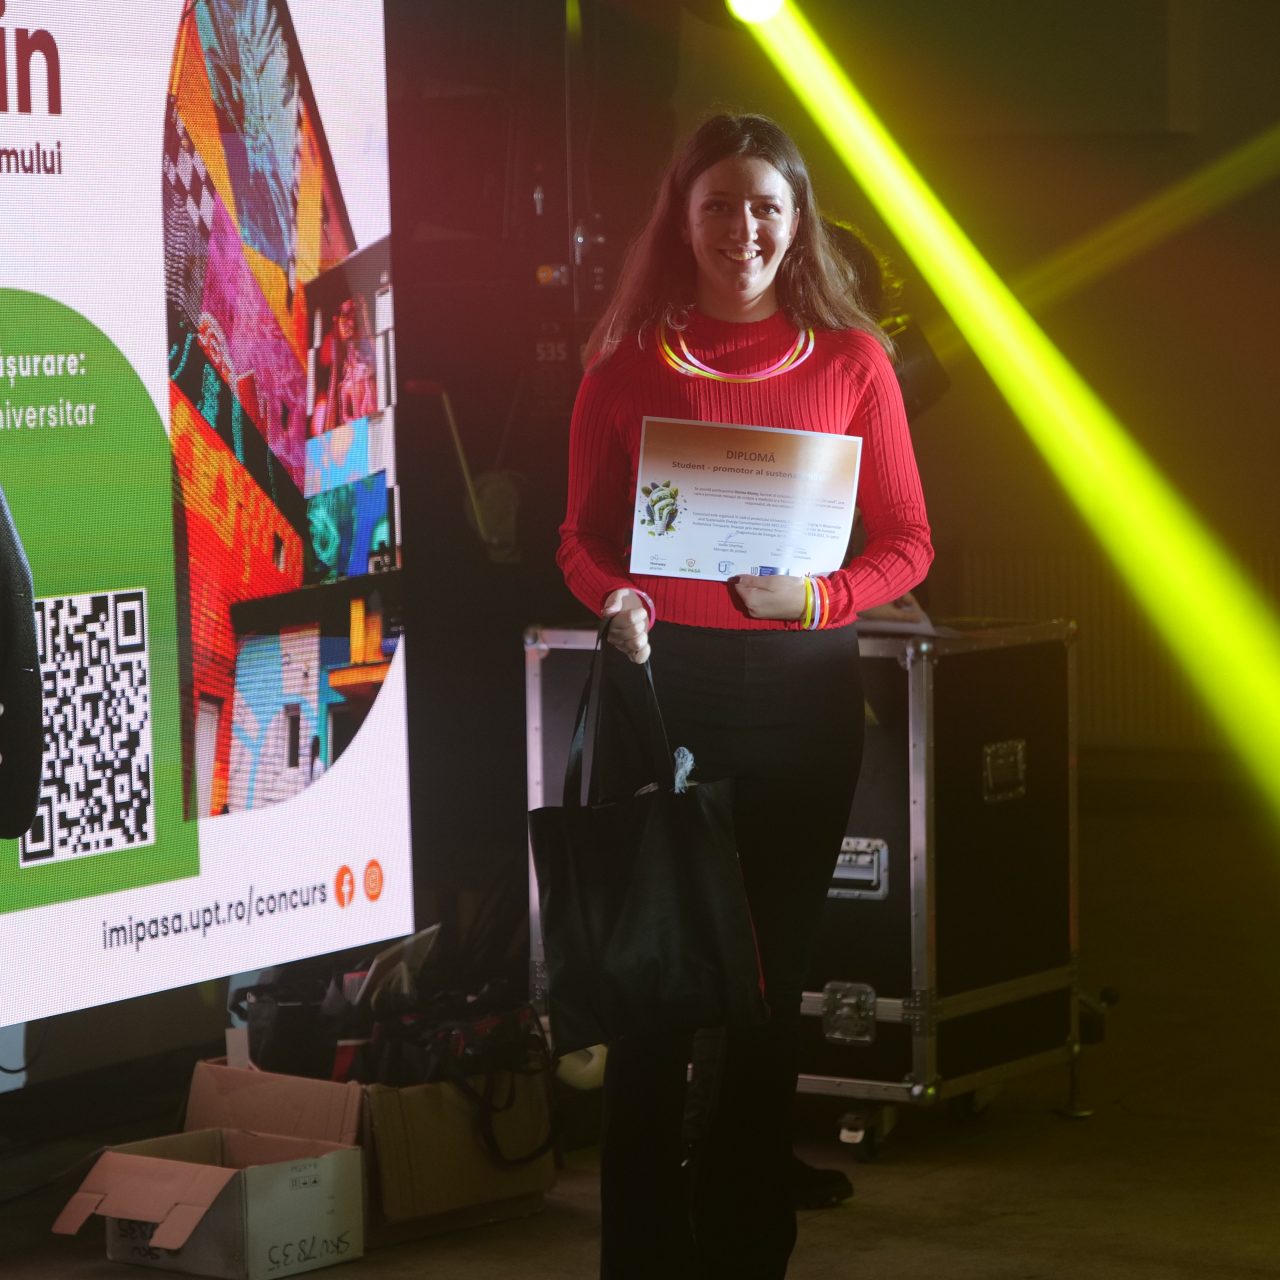 Winners of “Îmi Pasă” video contest awarded on November 17